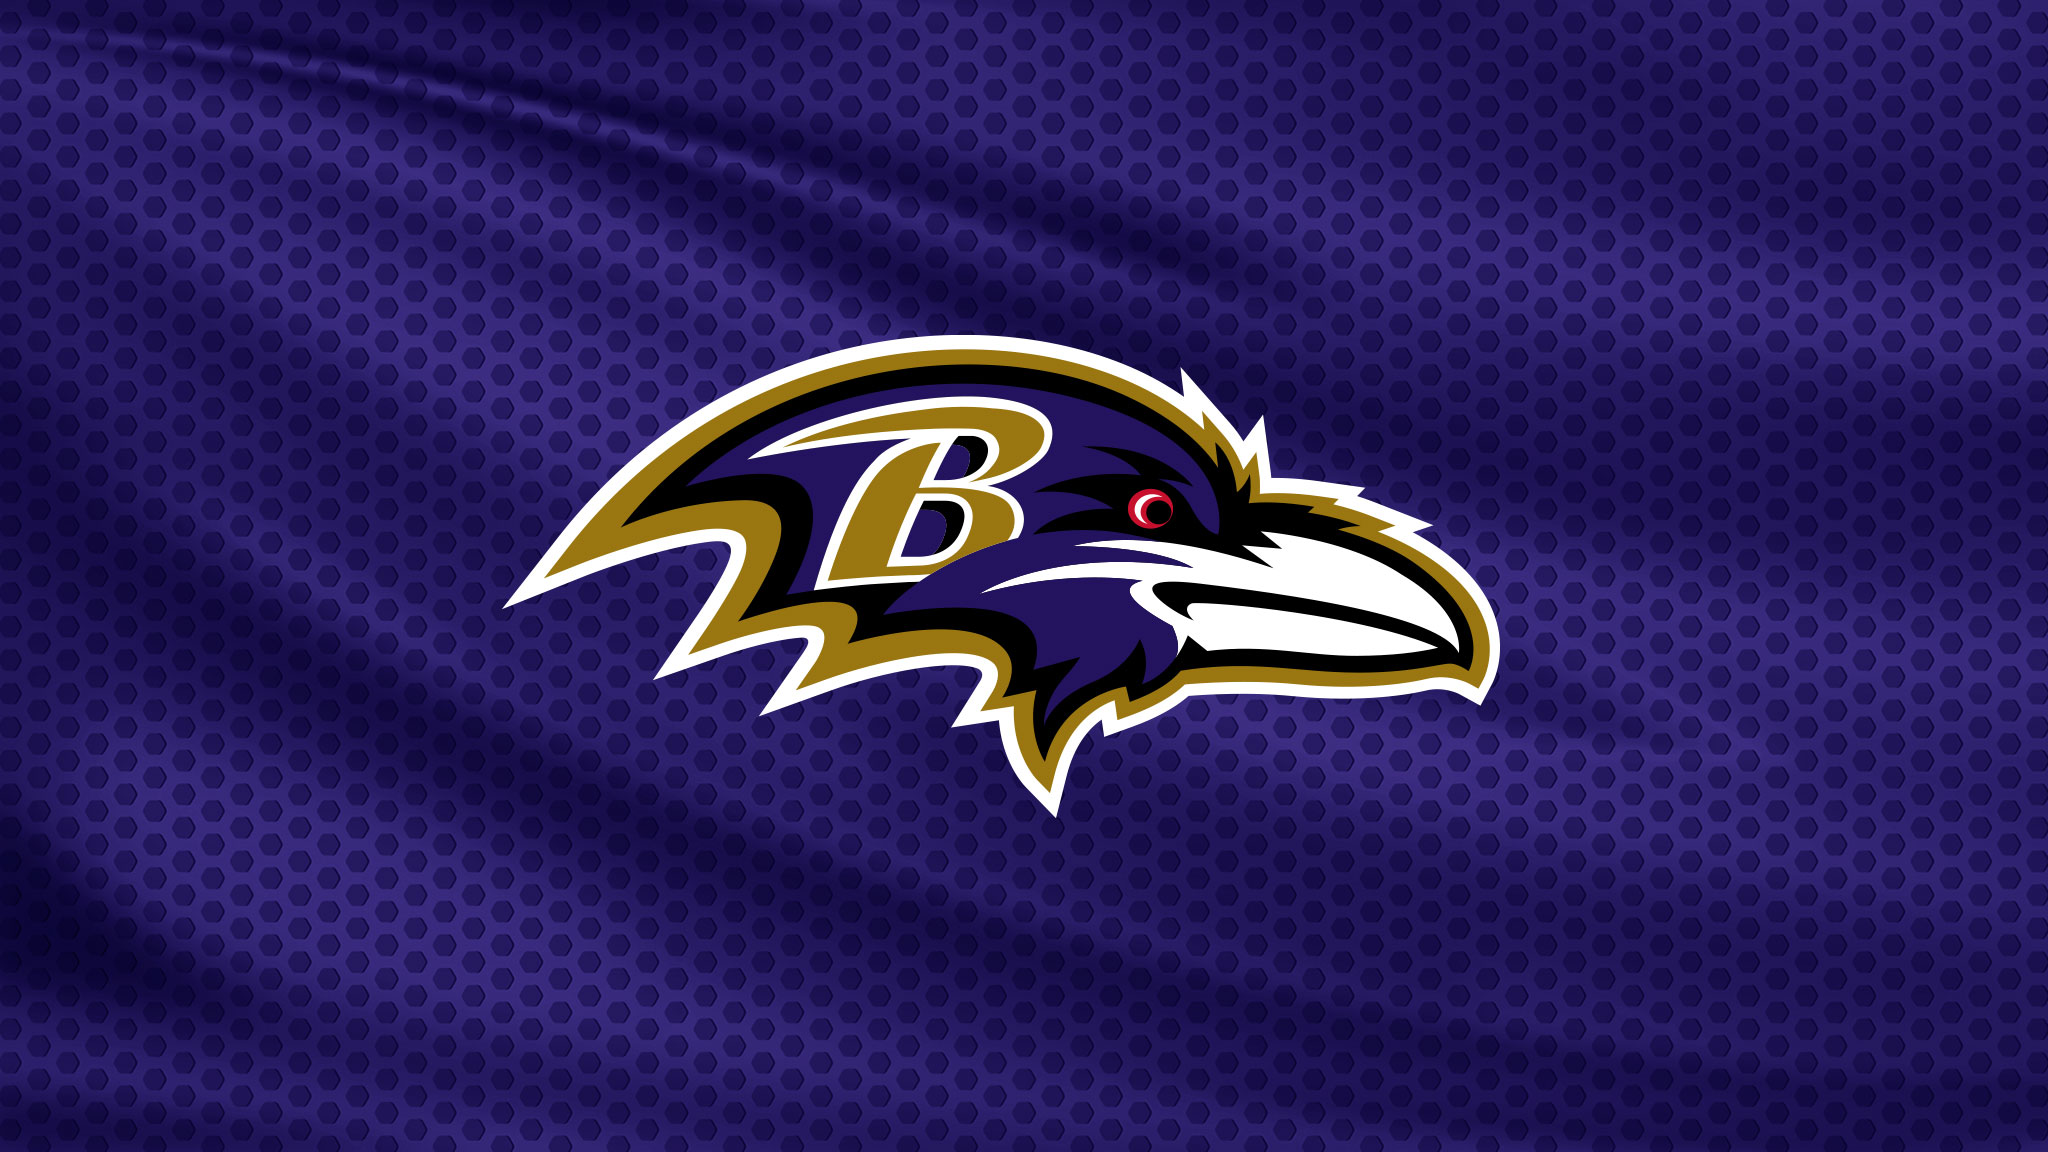 Baltimore Ravens vs. Las Vegas Raiders